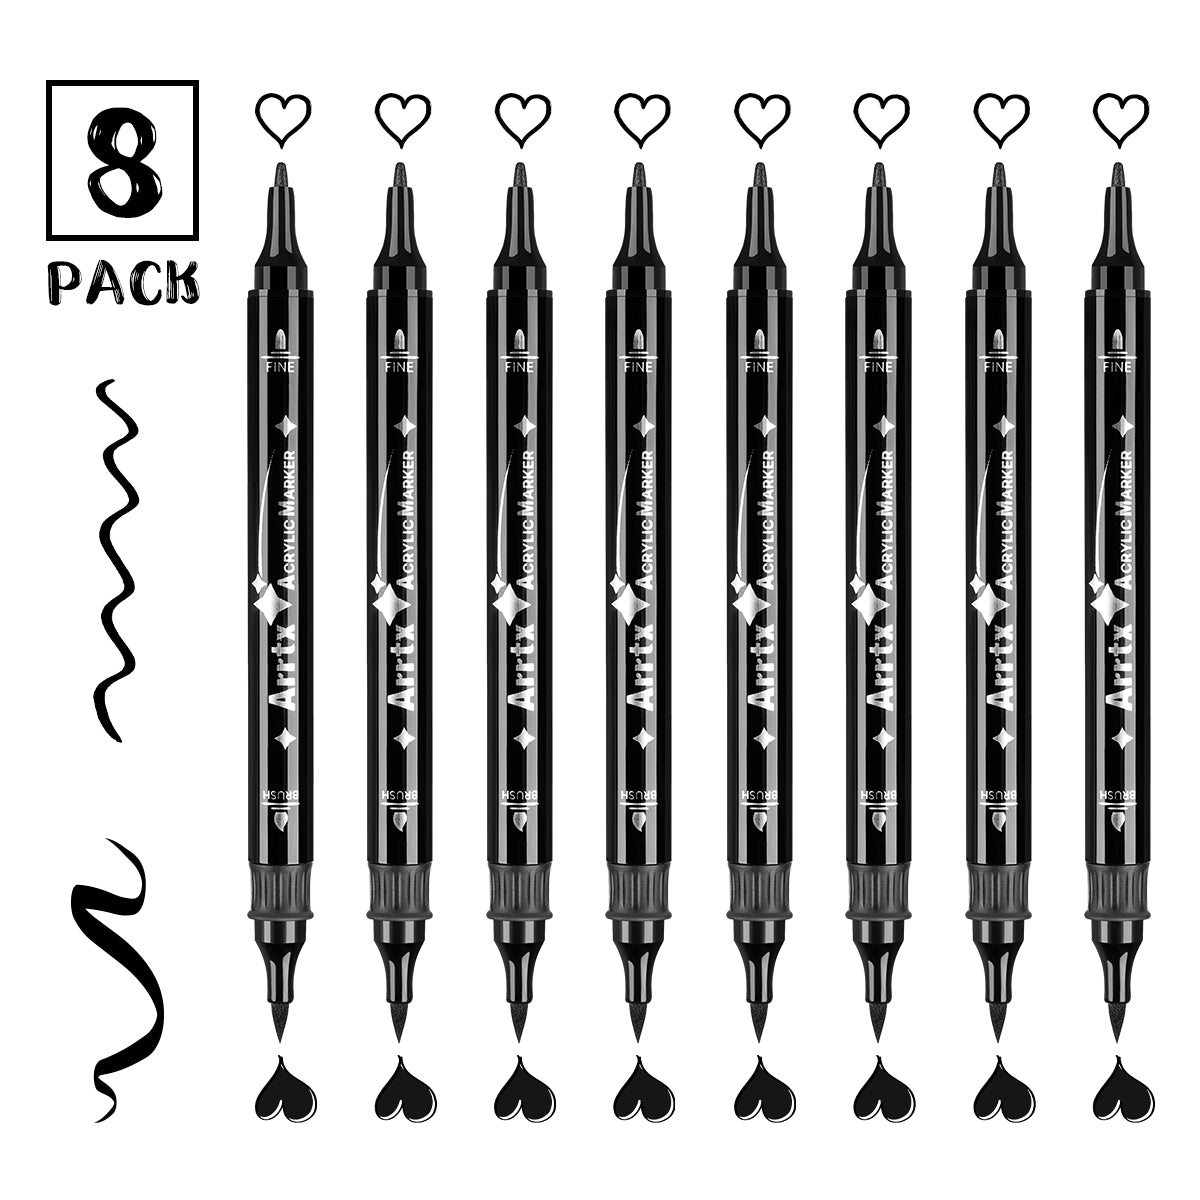 Arrtx 8er-Pack schwarze Acrylfarben-Marker mit Doppelspitze